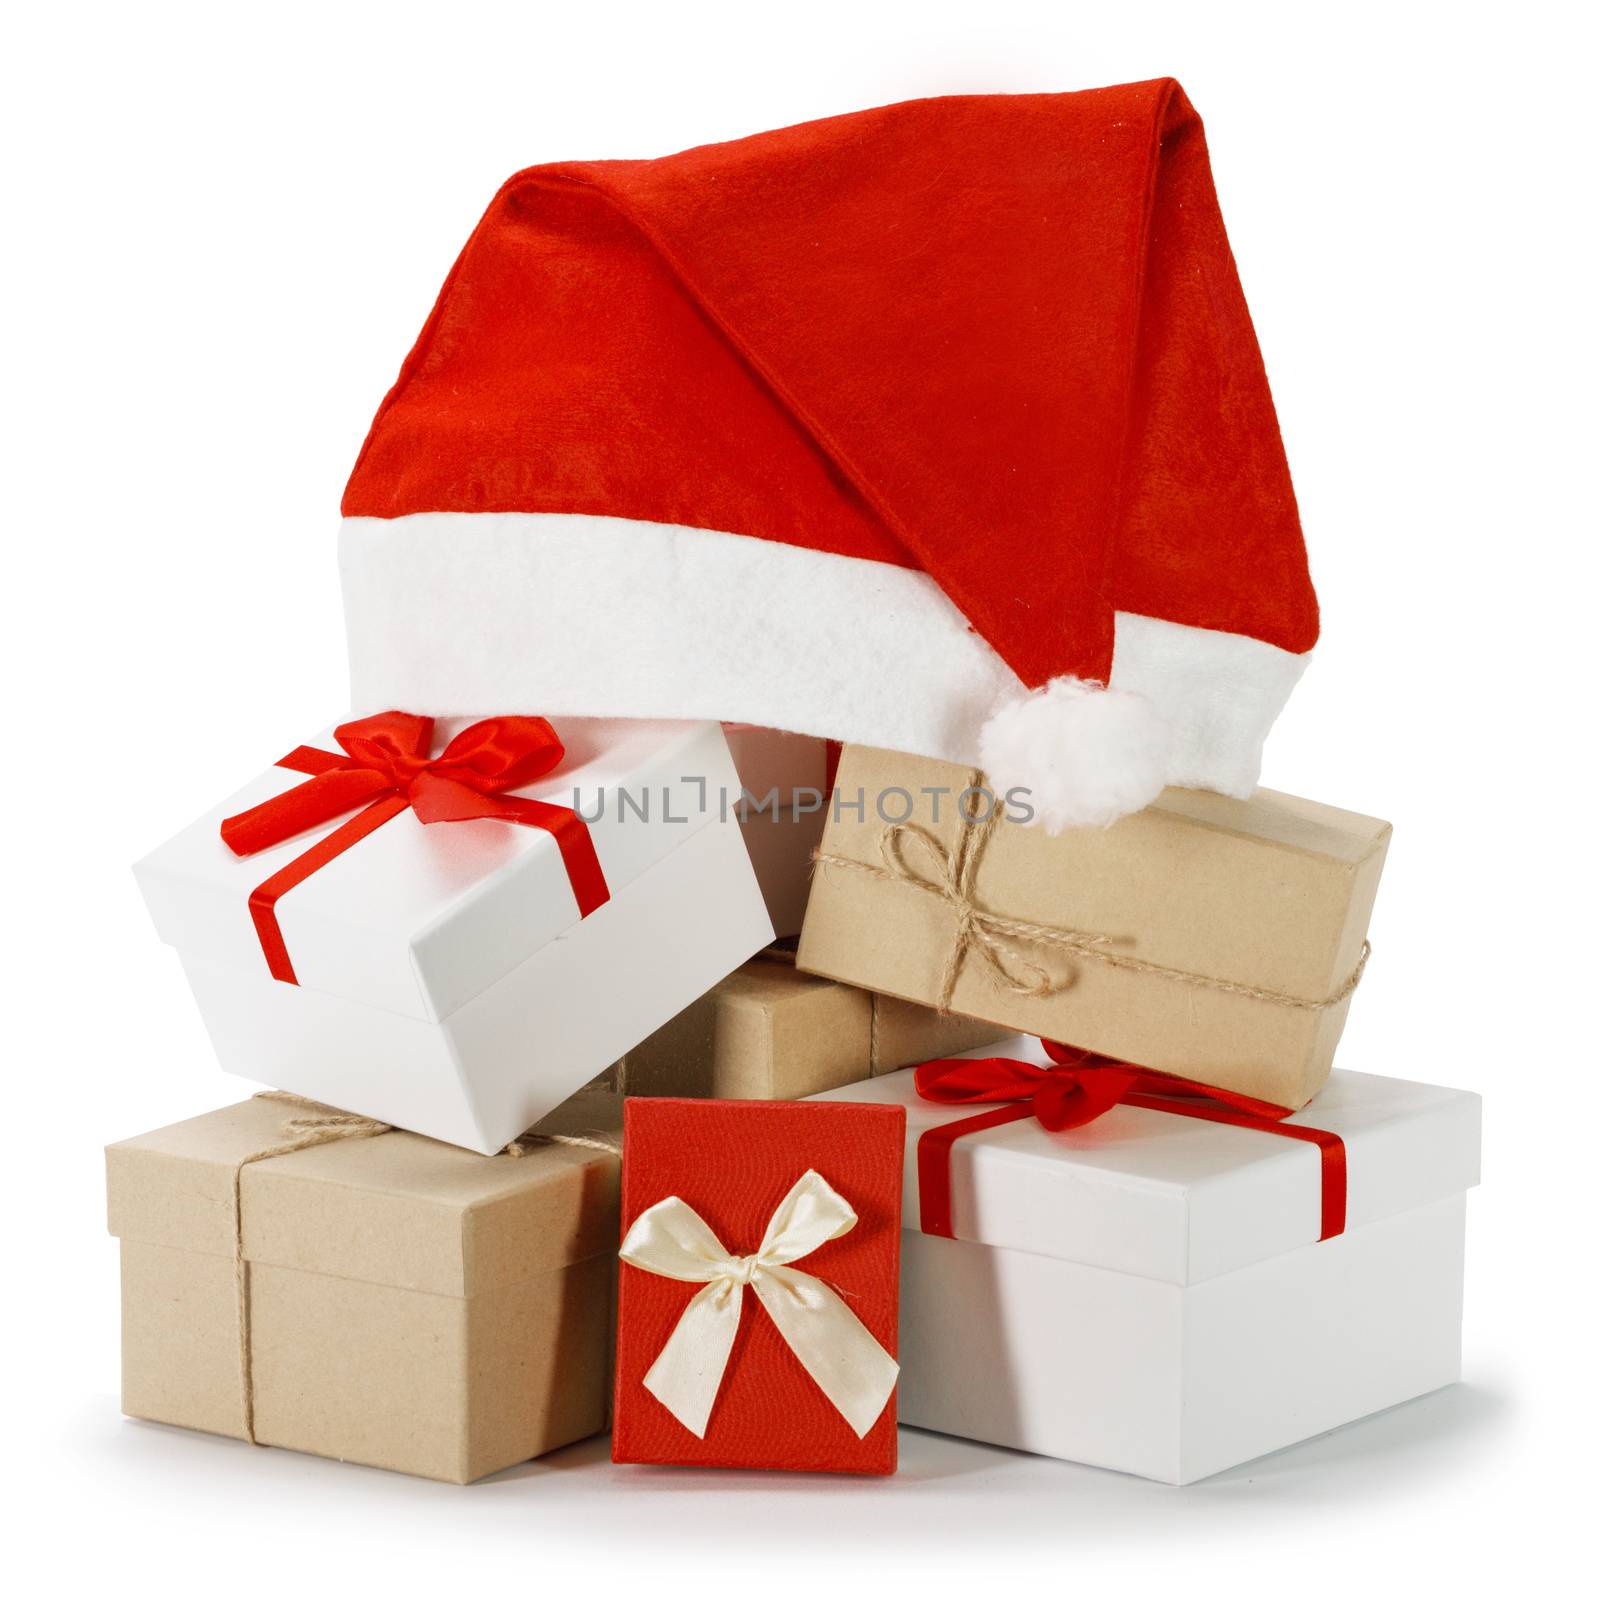 Christmas gifts and Santa hat by Yellowj